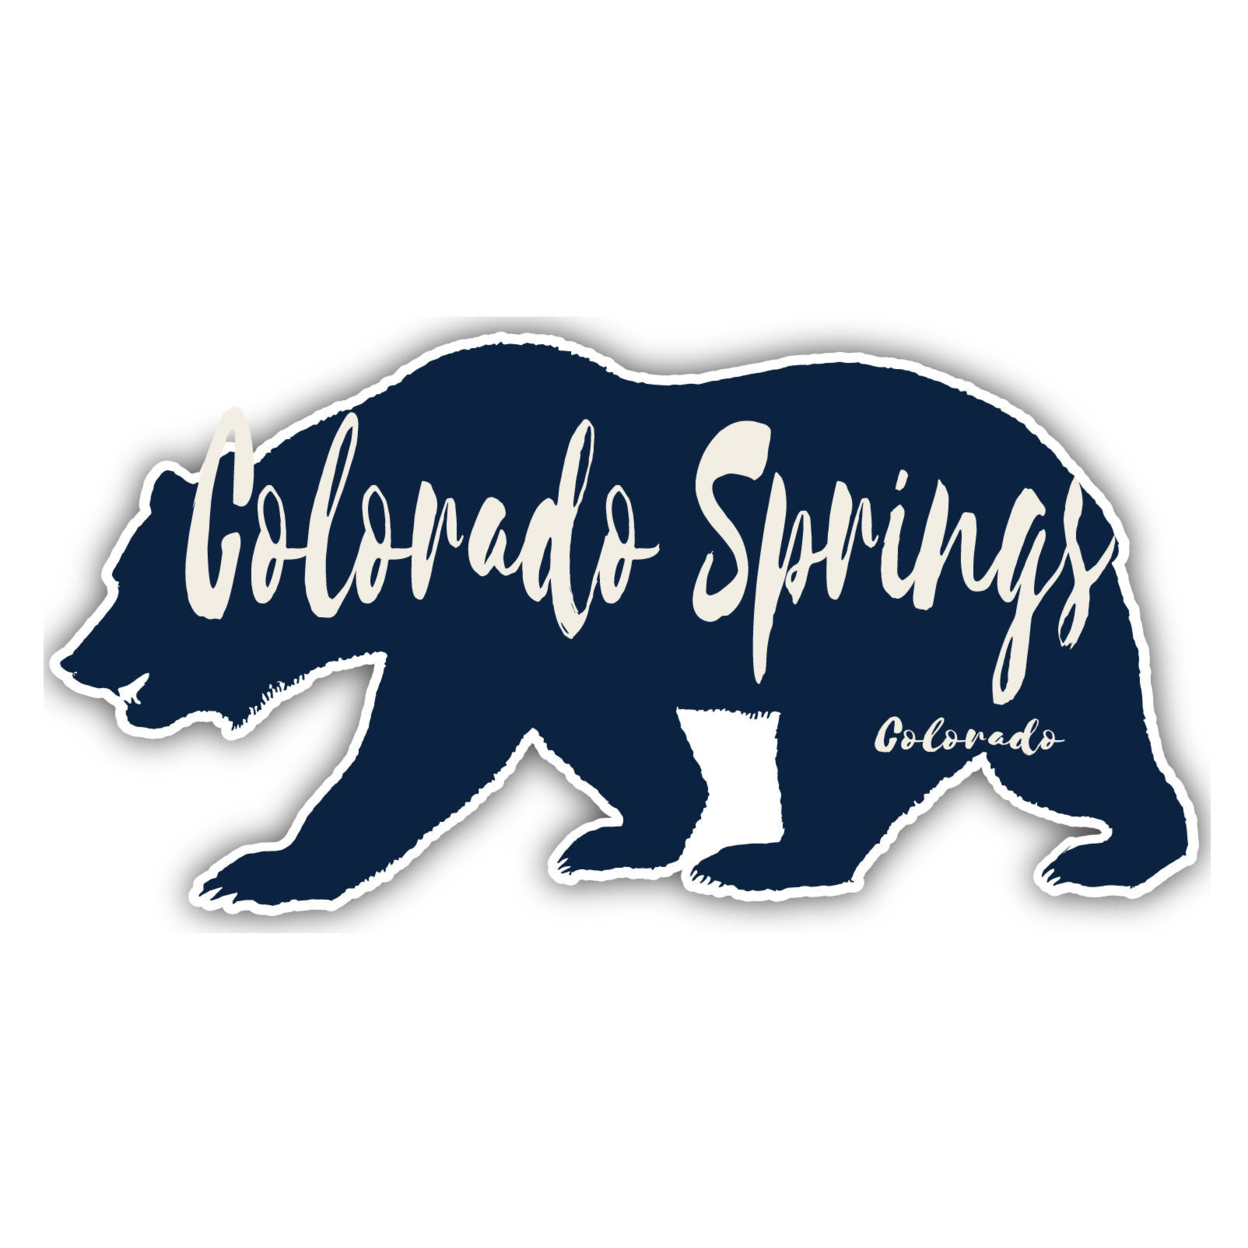 Colorado Springs Colorado Souvenir Decorative Stickers (Choose Theme And Size) - 4-Pack, 4-Inch, Tent